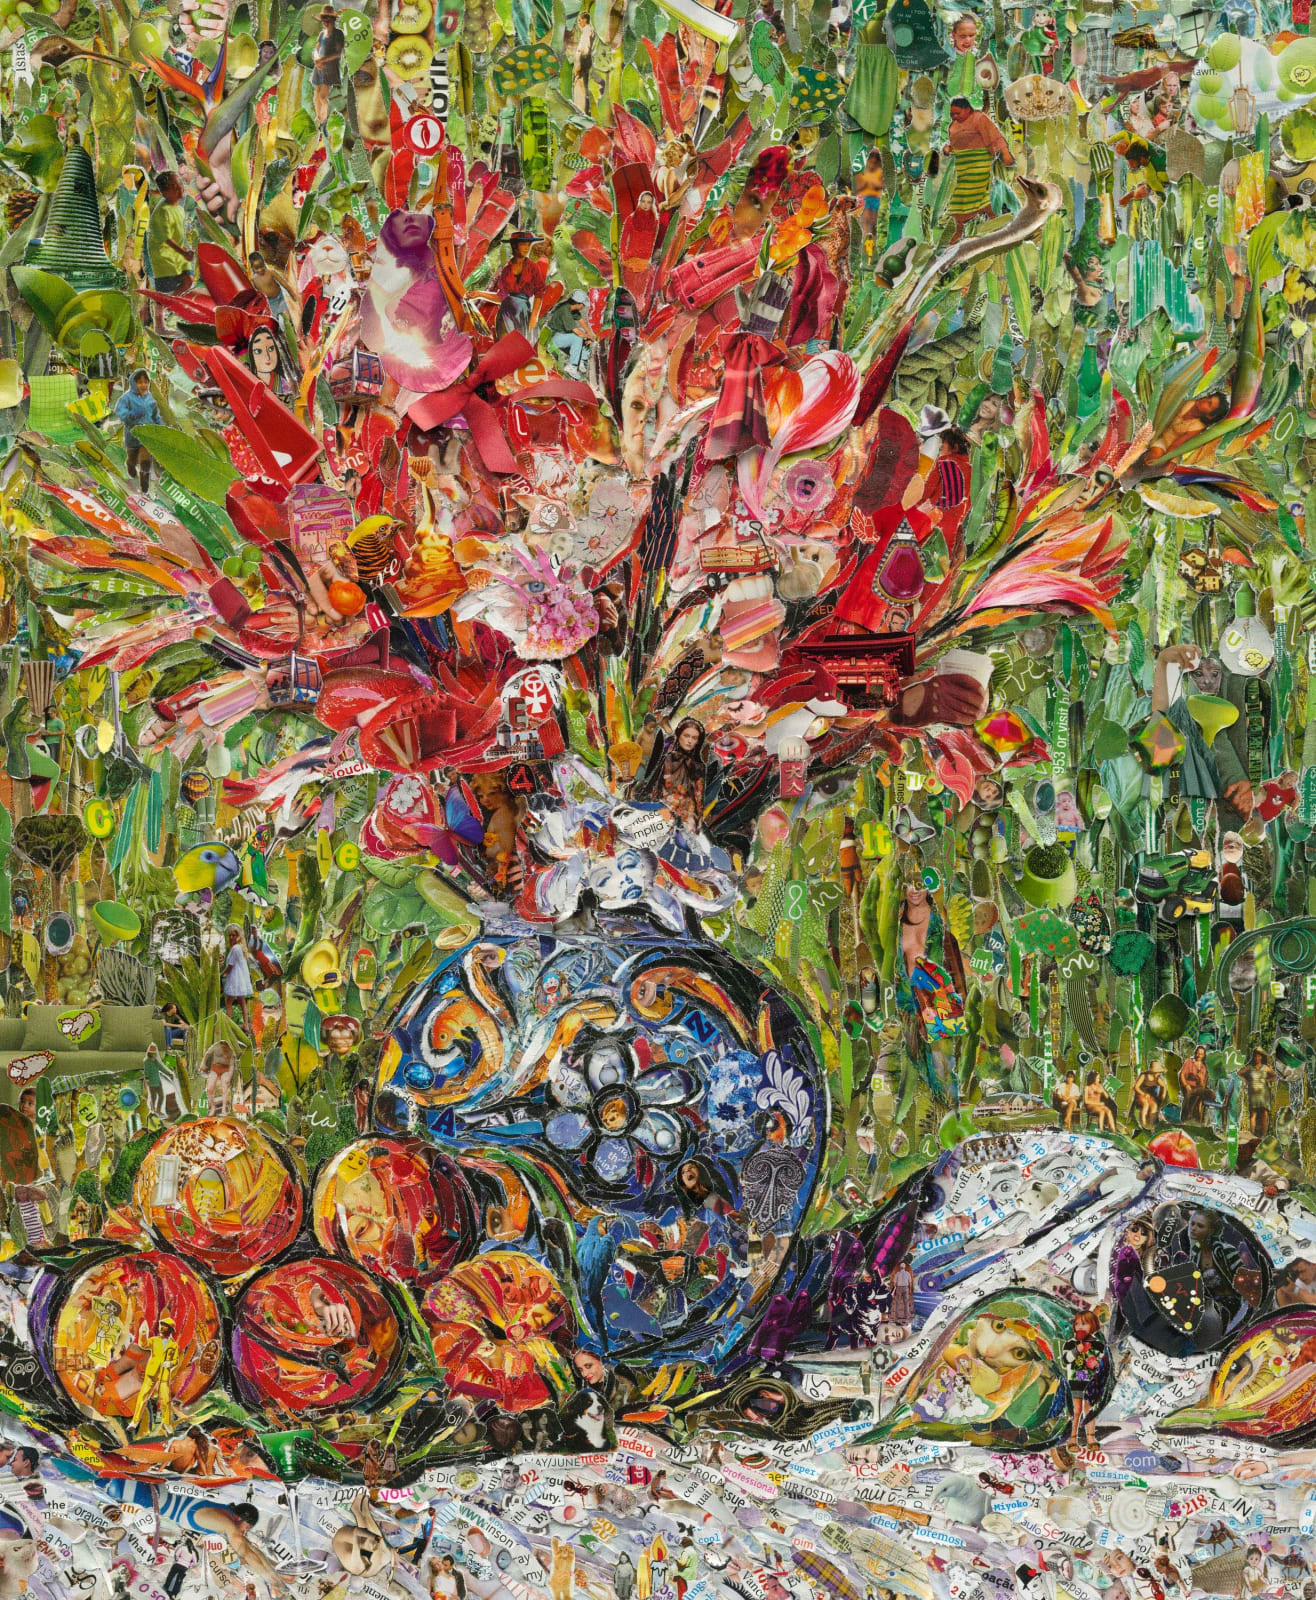 Vik Muniz, Flowers and Fruit, After Pierre-Auguste Renoir, 2013